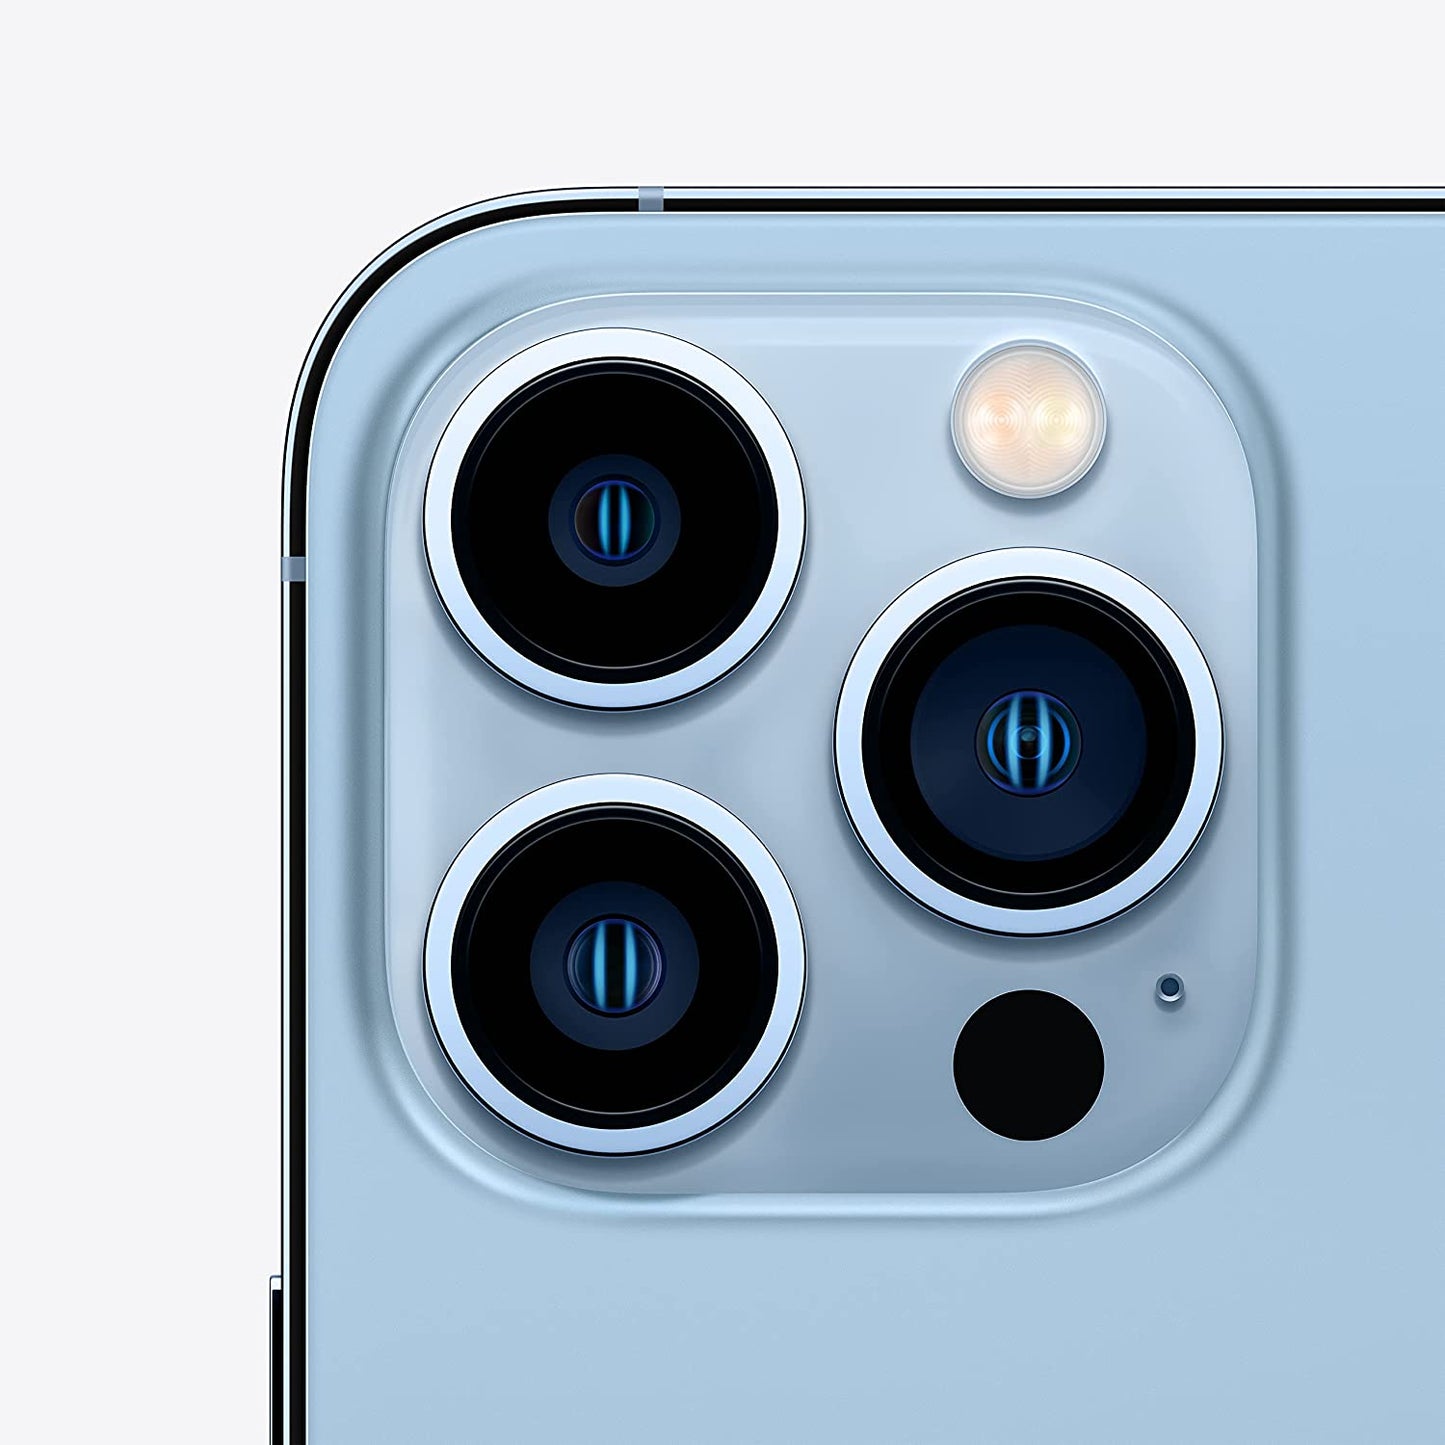 Apple iPhone 13 Pro Max (256GB) - Sierra Blue